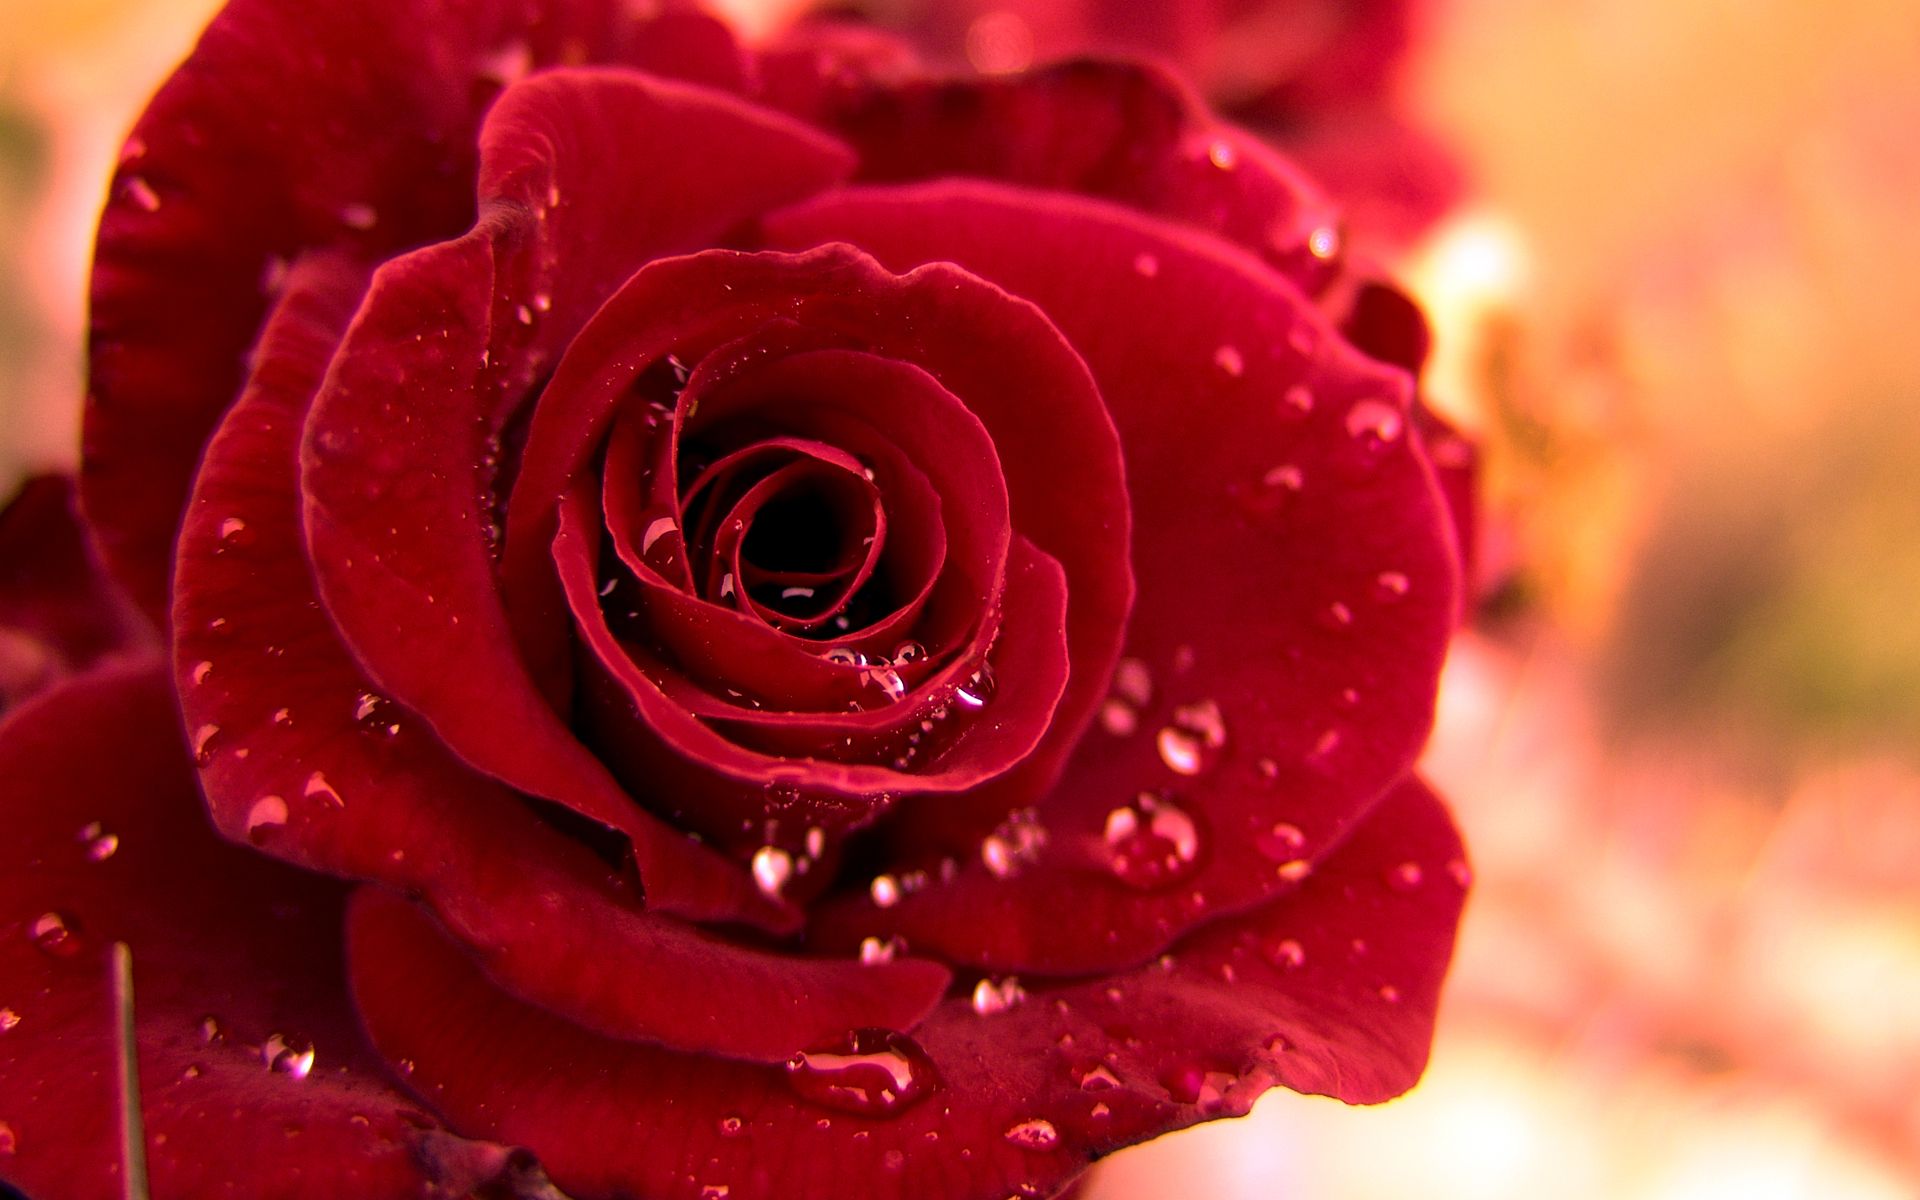 Red Rose Love - wallpaper.